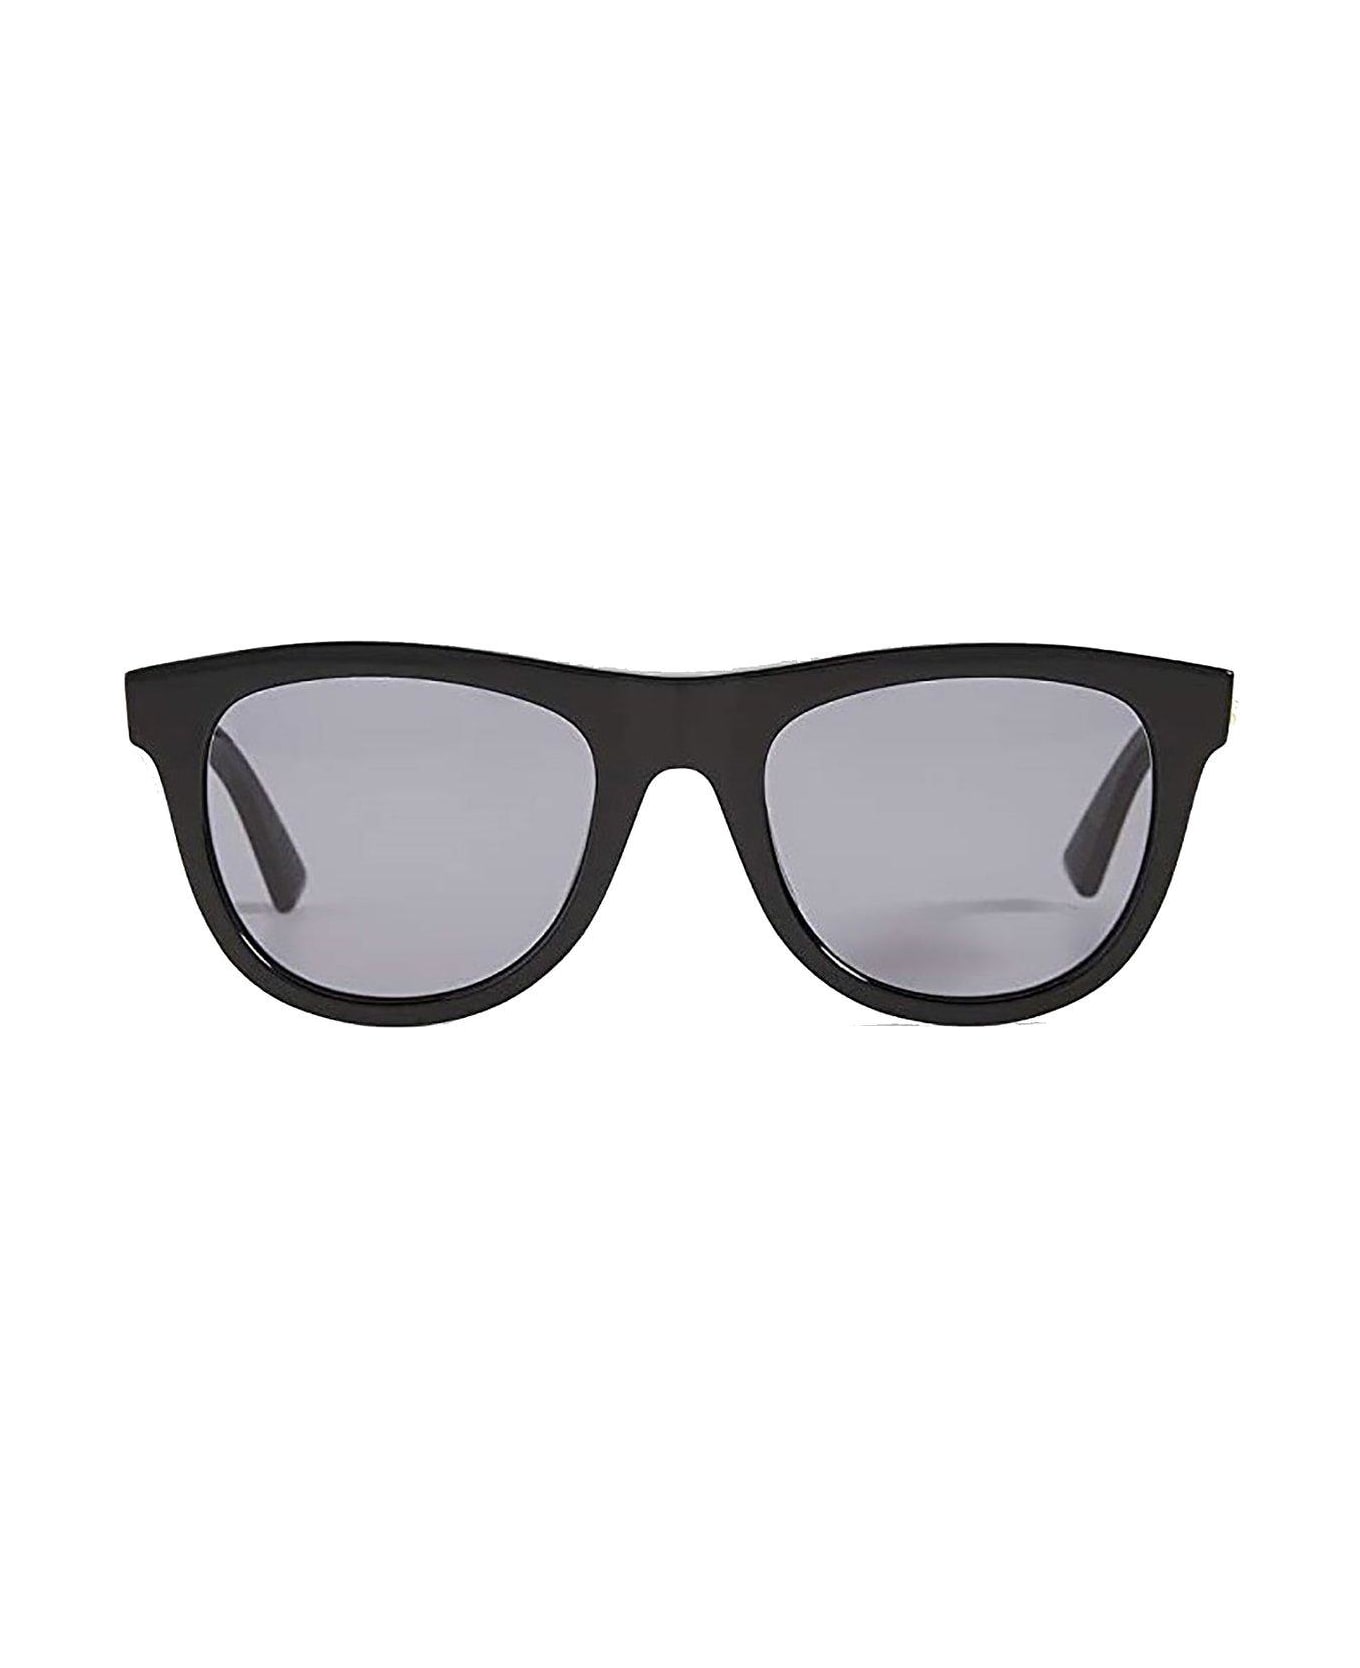 Bottega Veneta Eyewear Round Frame Sunglasses - 001 black black grey